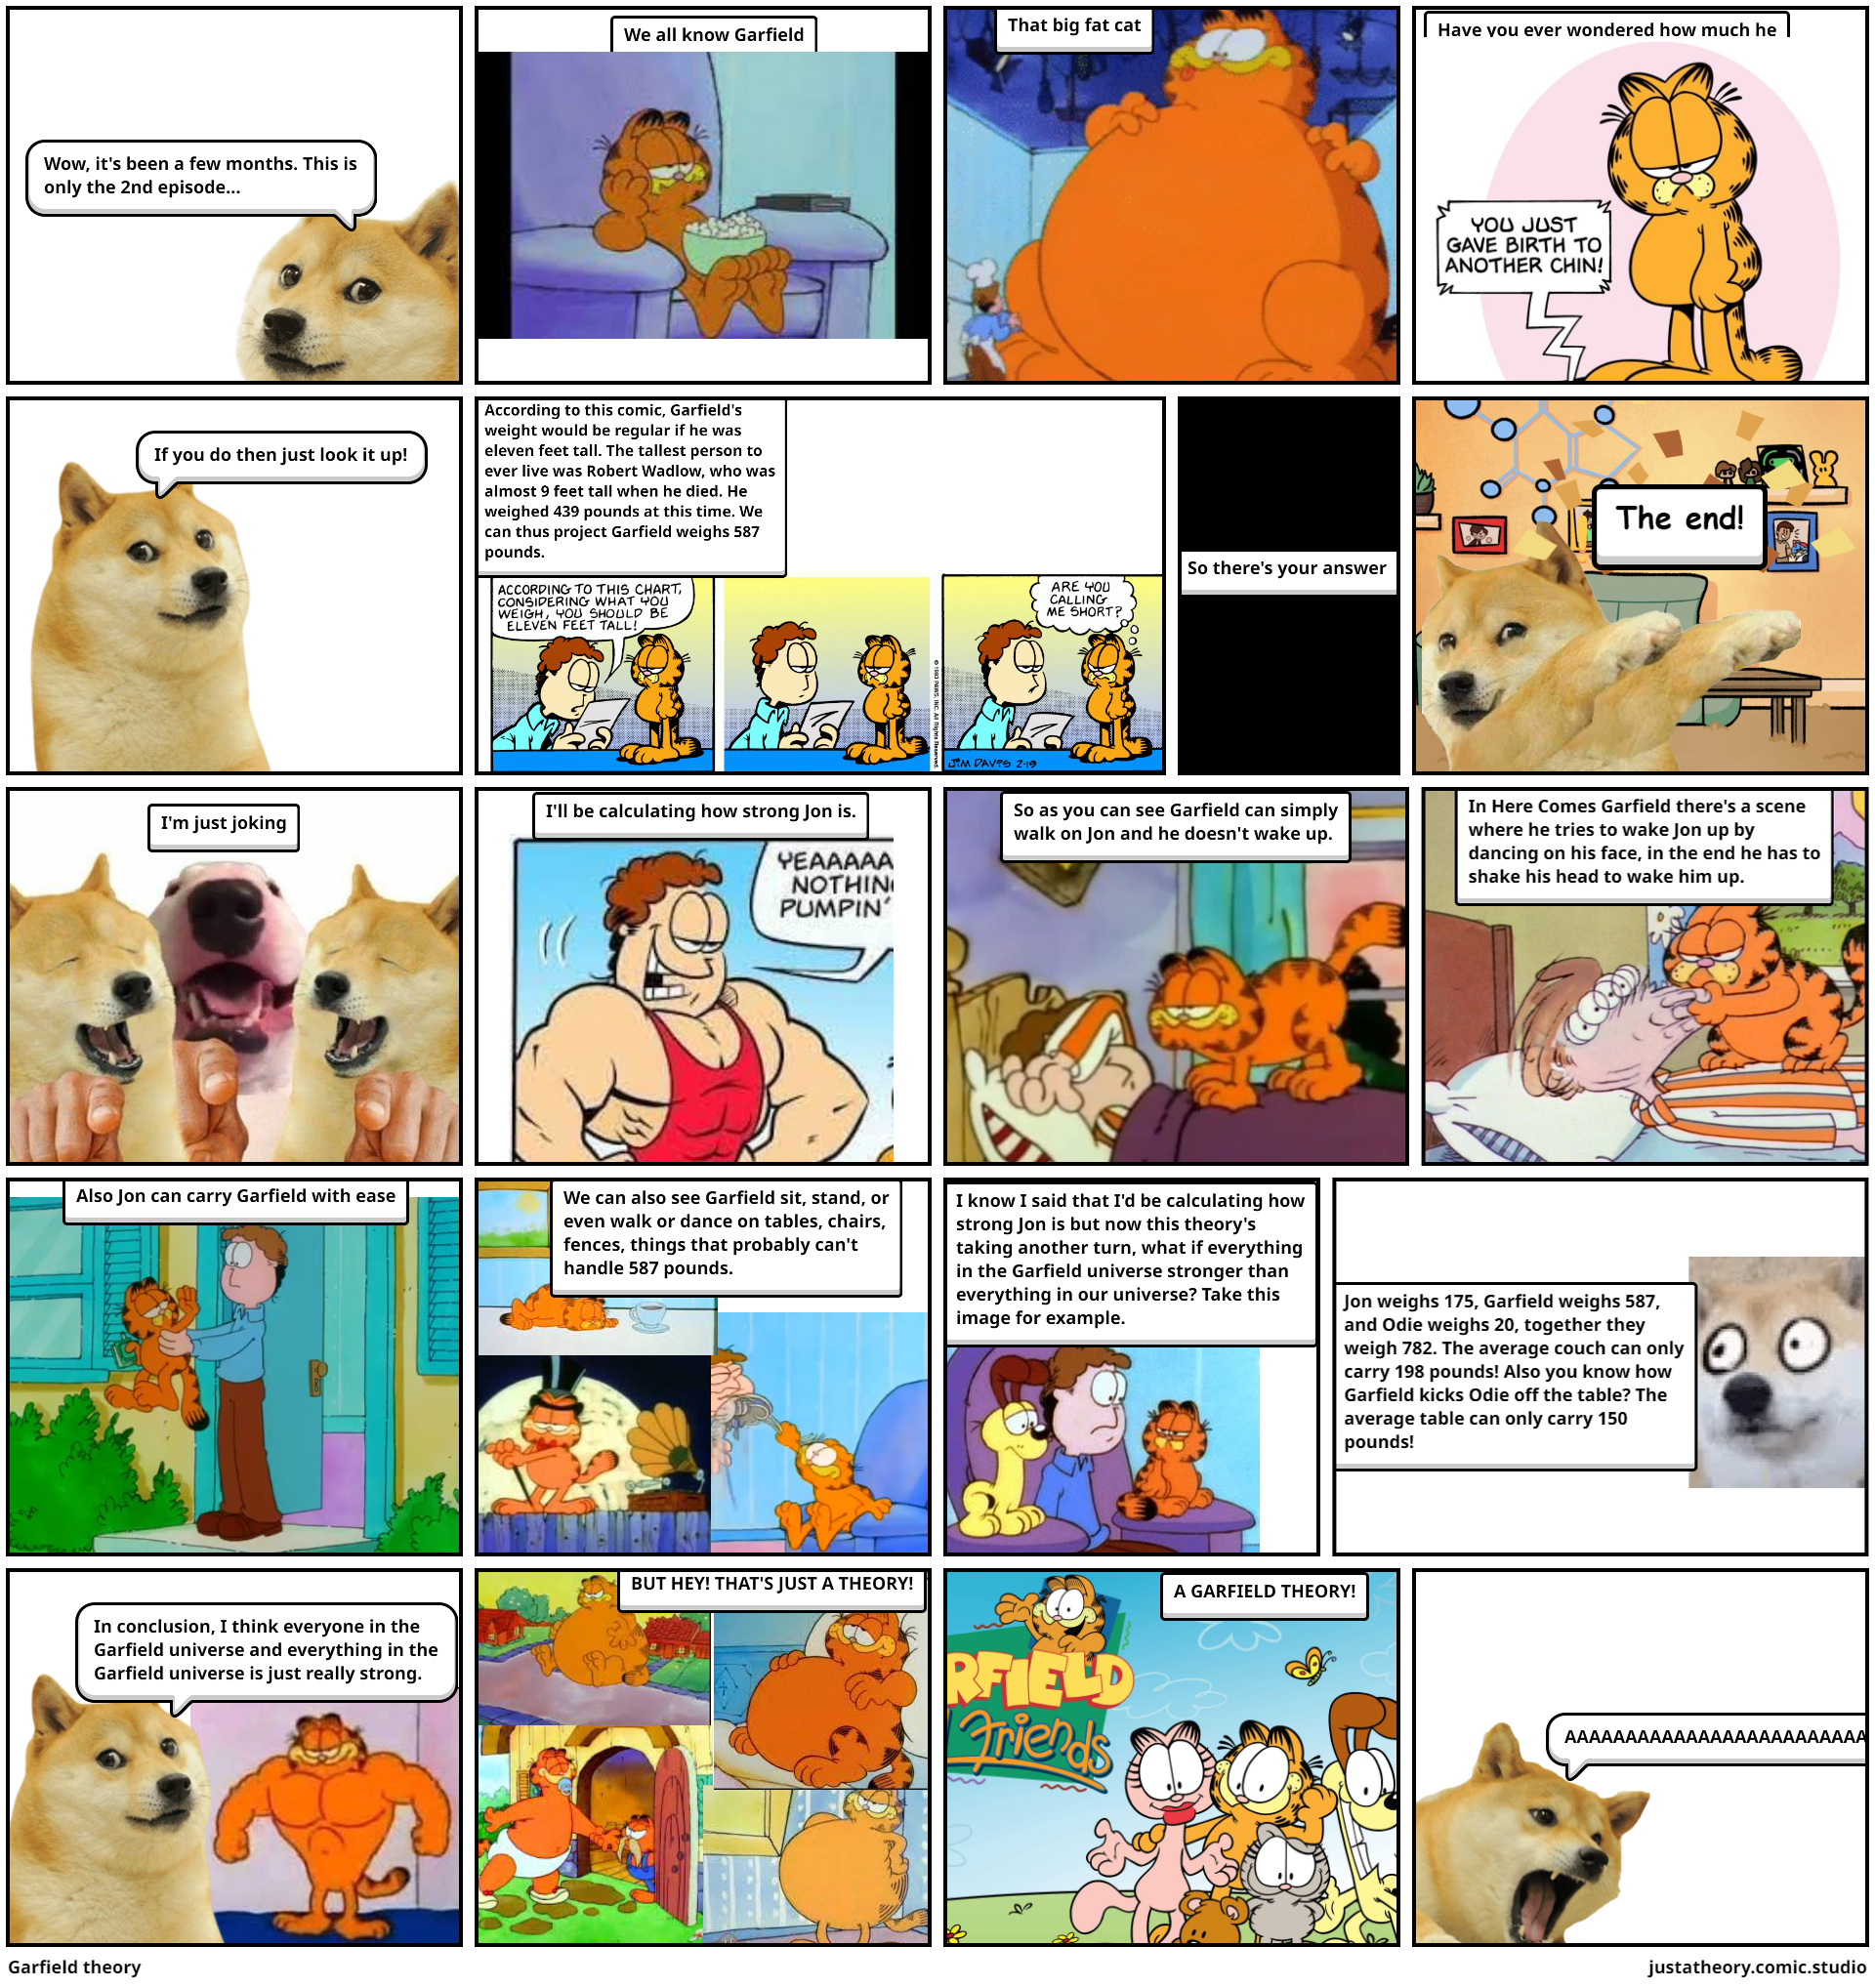 Garfield theory